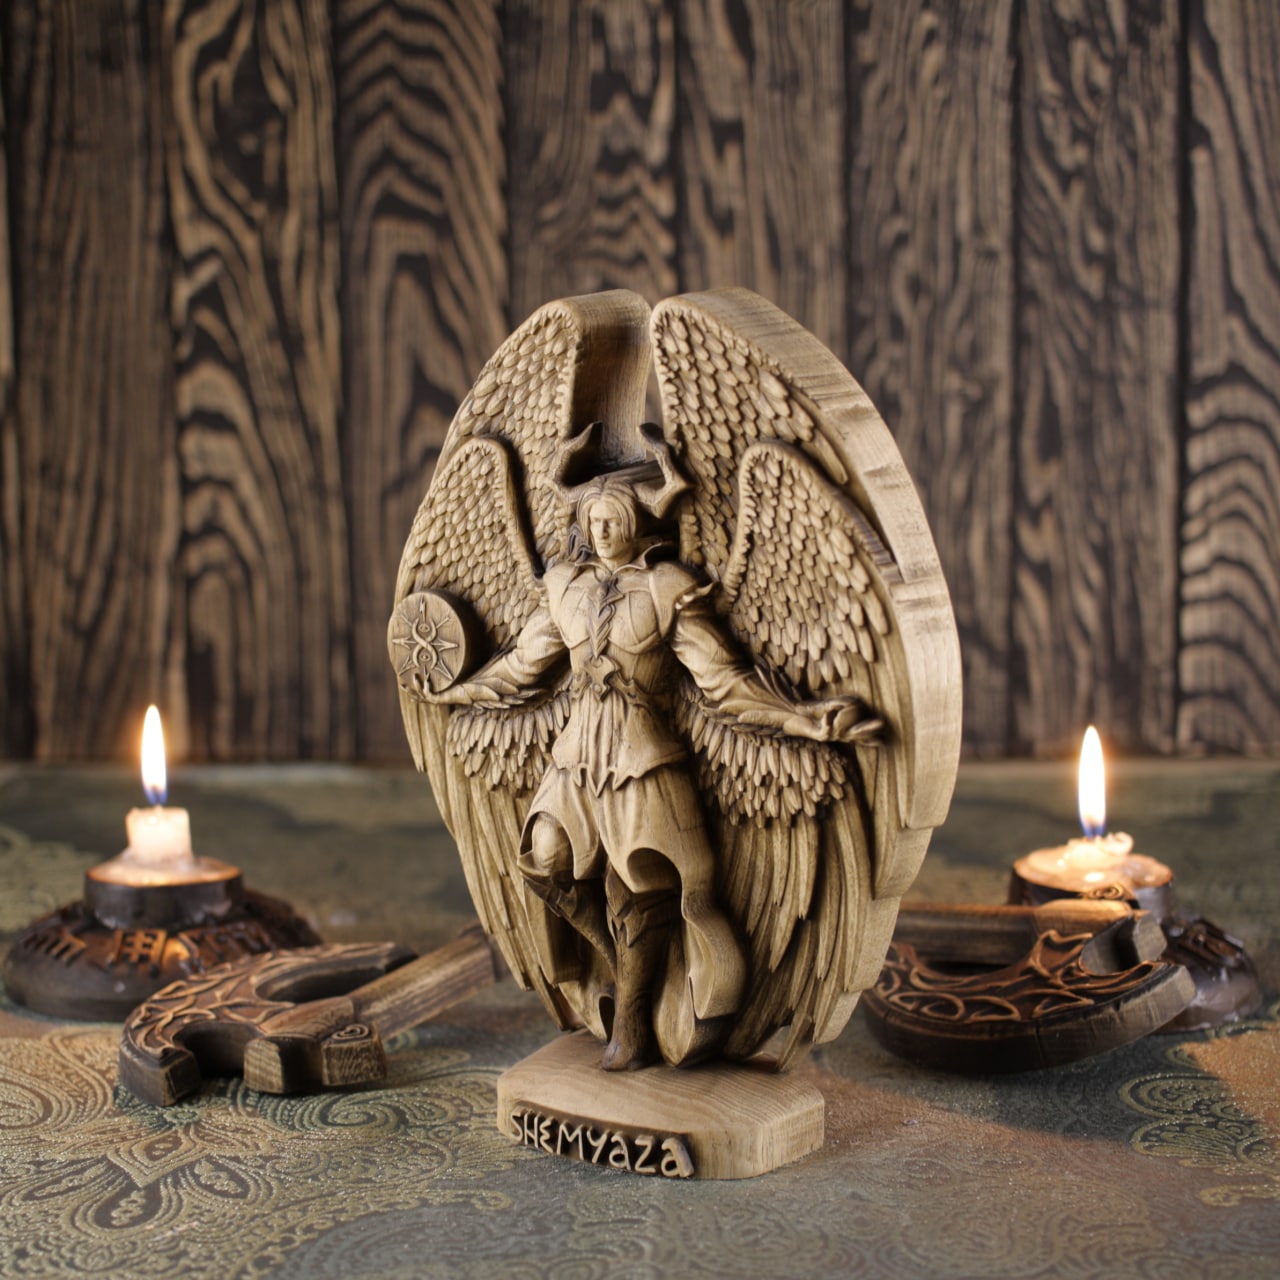 Shemyaza Fallen Angel Statue - The Wooden Satan Figurine